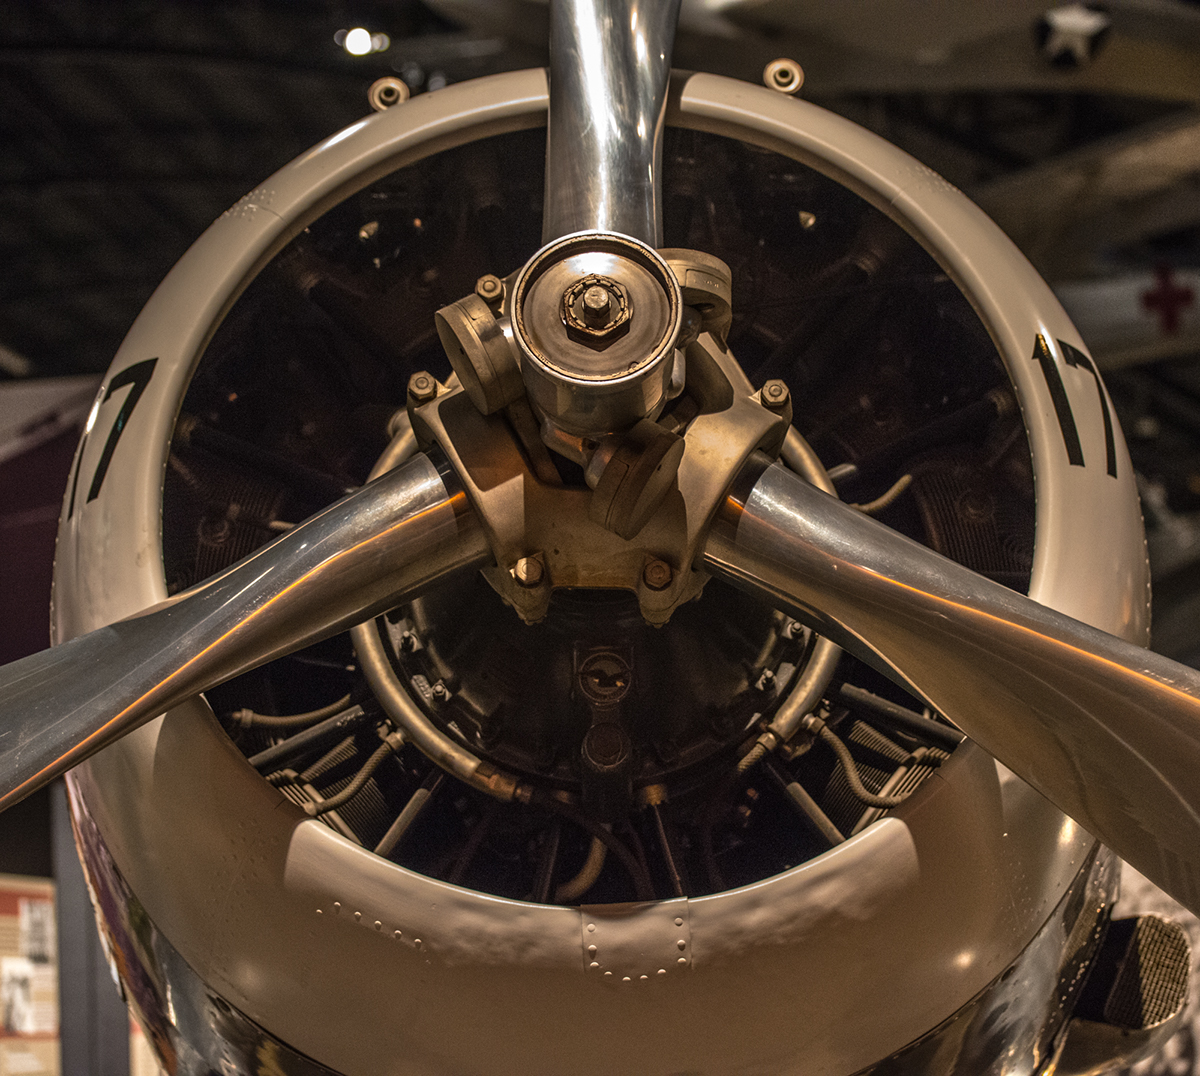 USAF planes Aircraft flight Wright Brothers aviation history museum ohio